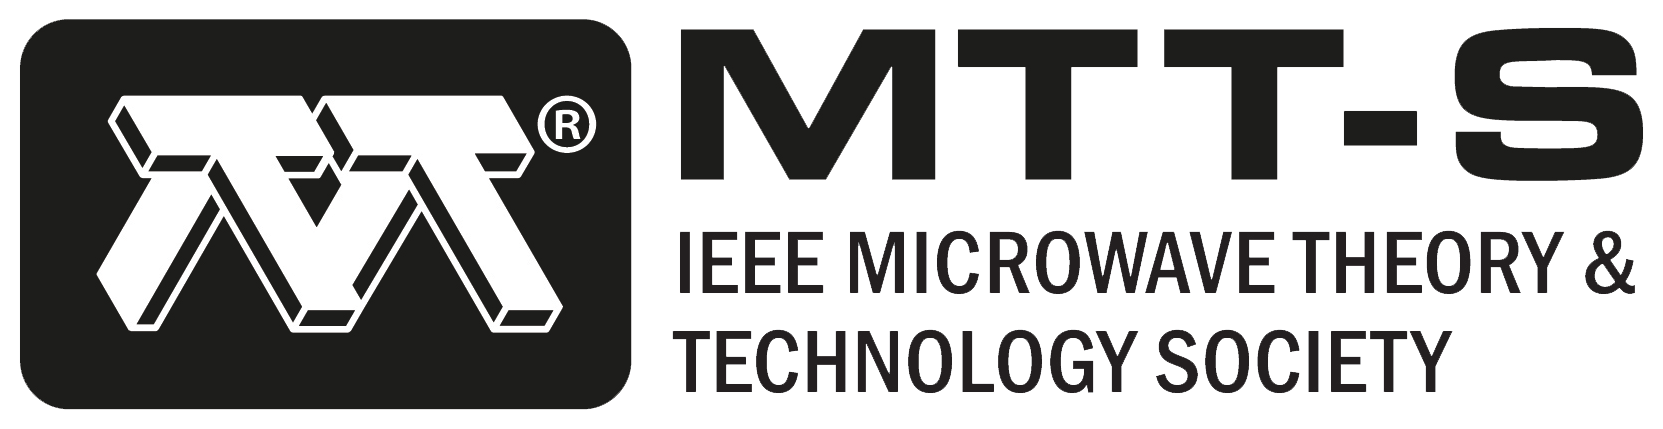 mtts logo